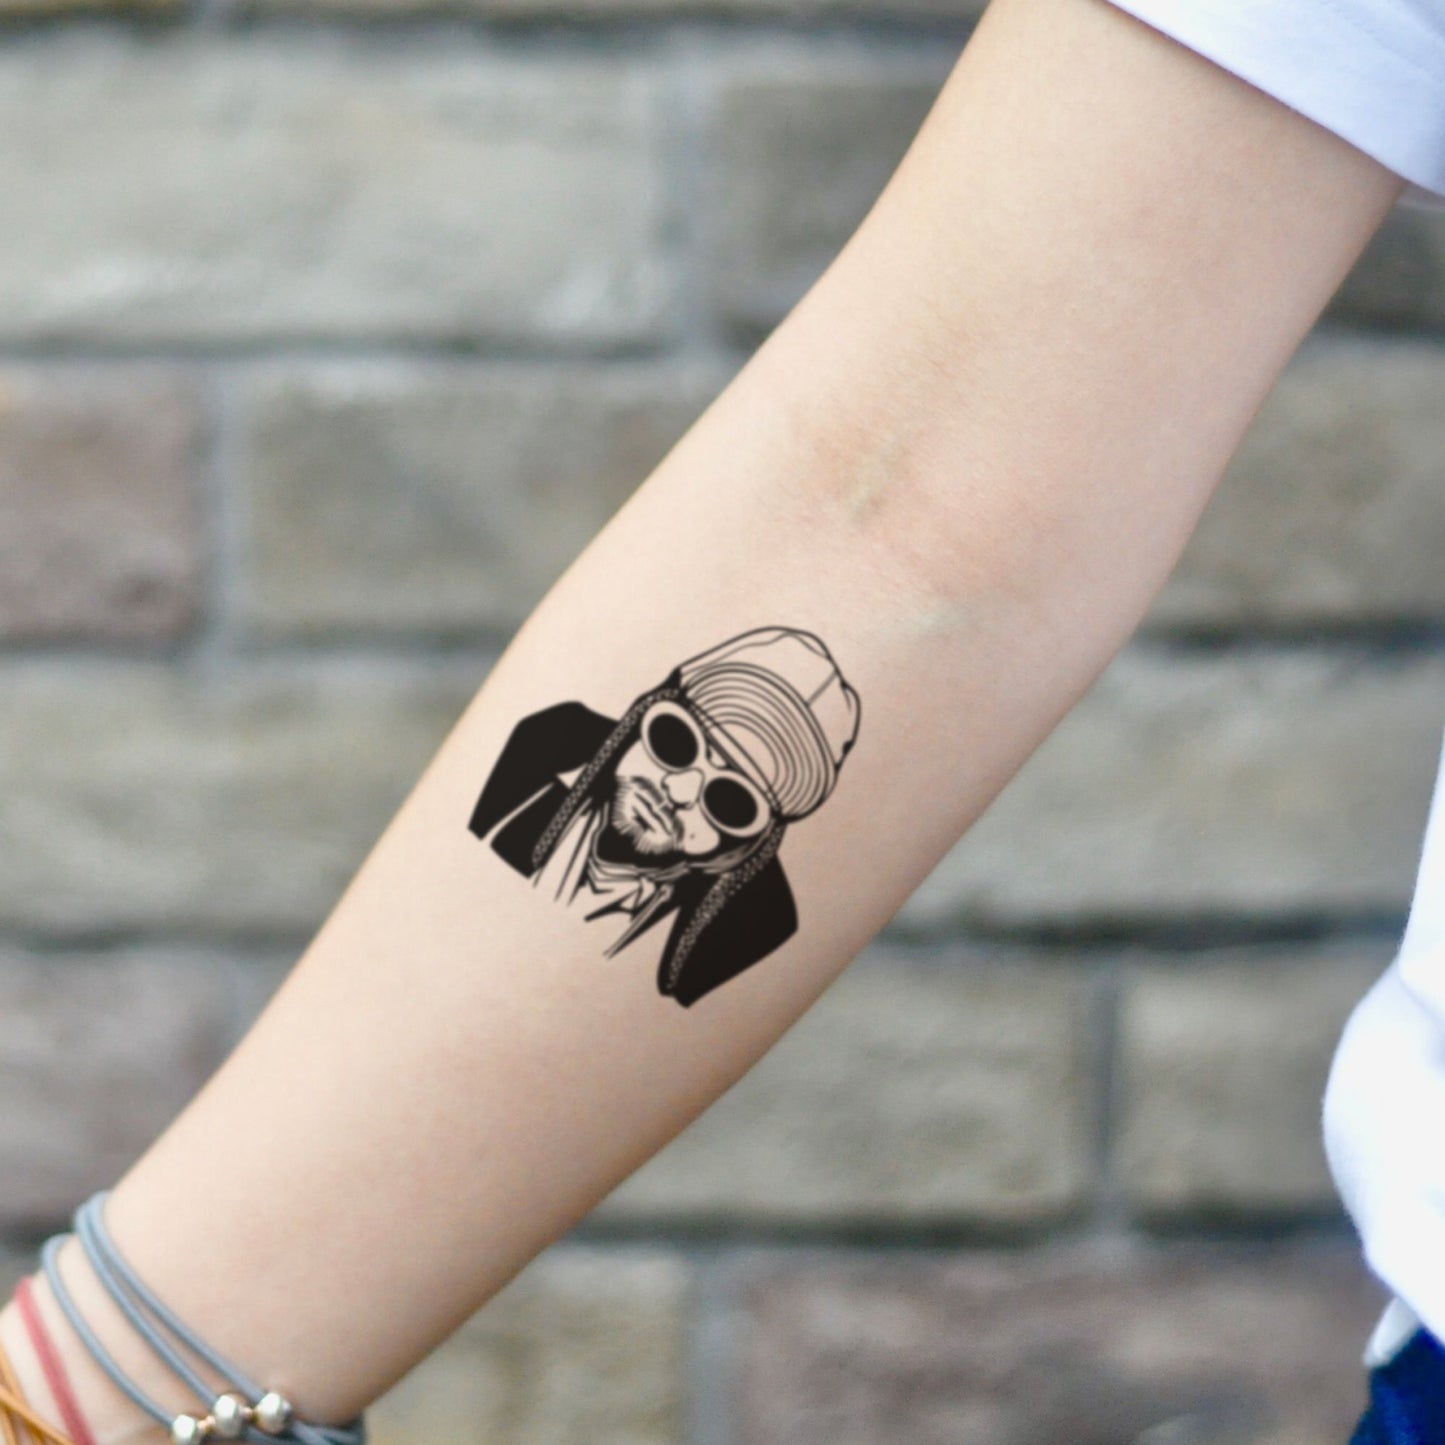 fake small kurt cobain portrait temporary tattoo sticker design idea on inner arm